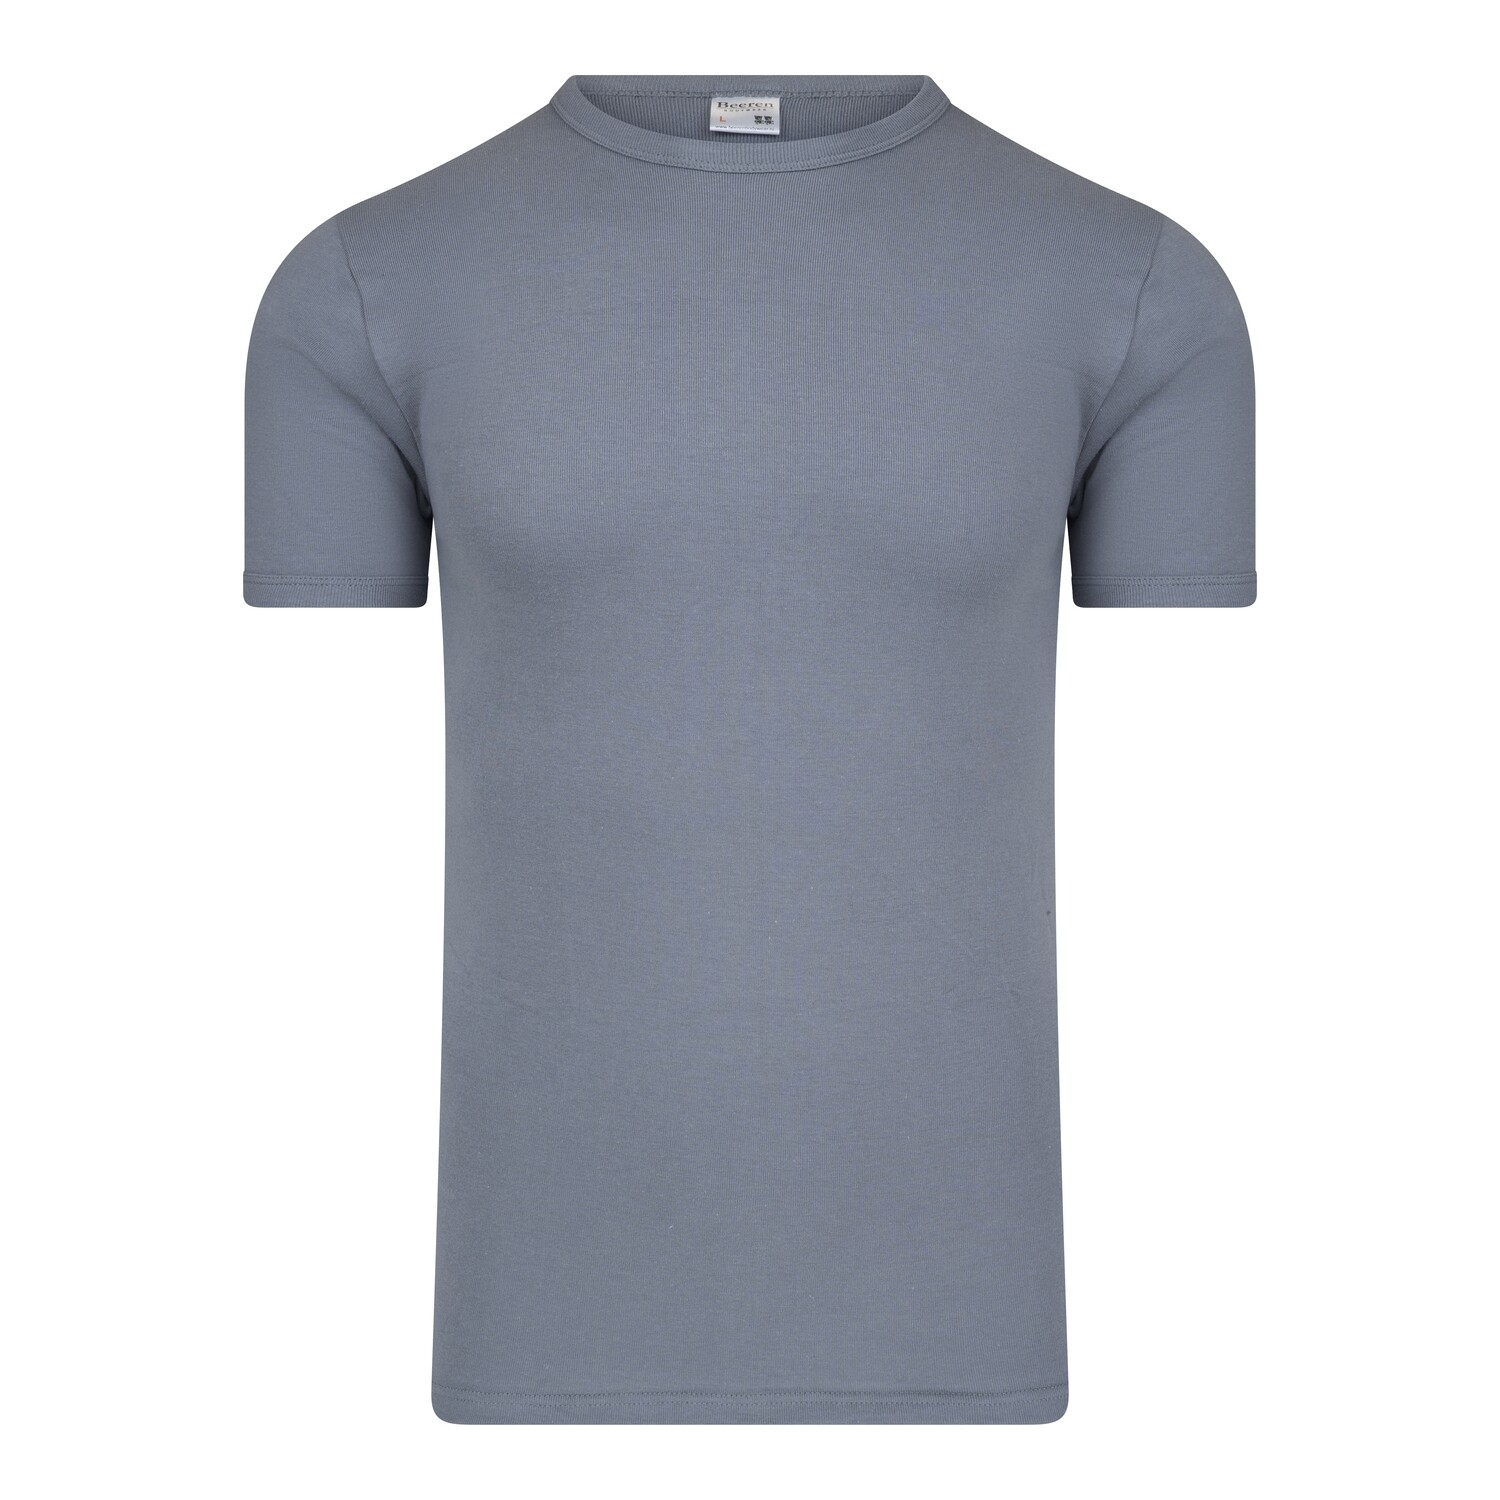 (11-178) Heren T-shirt R-hals M3000 steel grey L